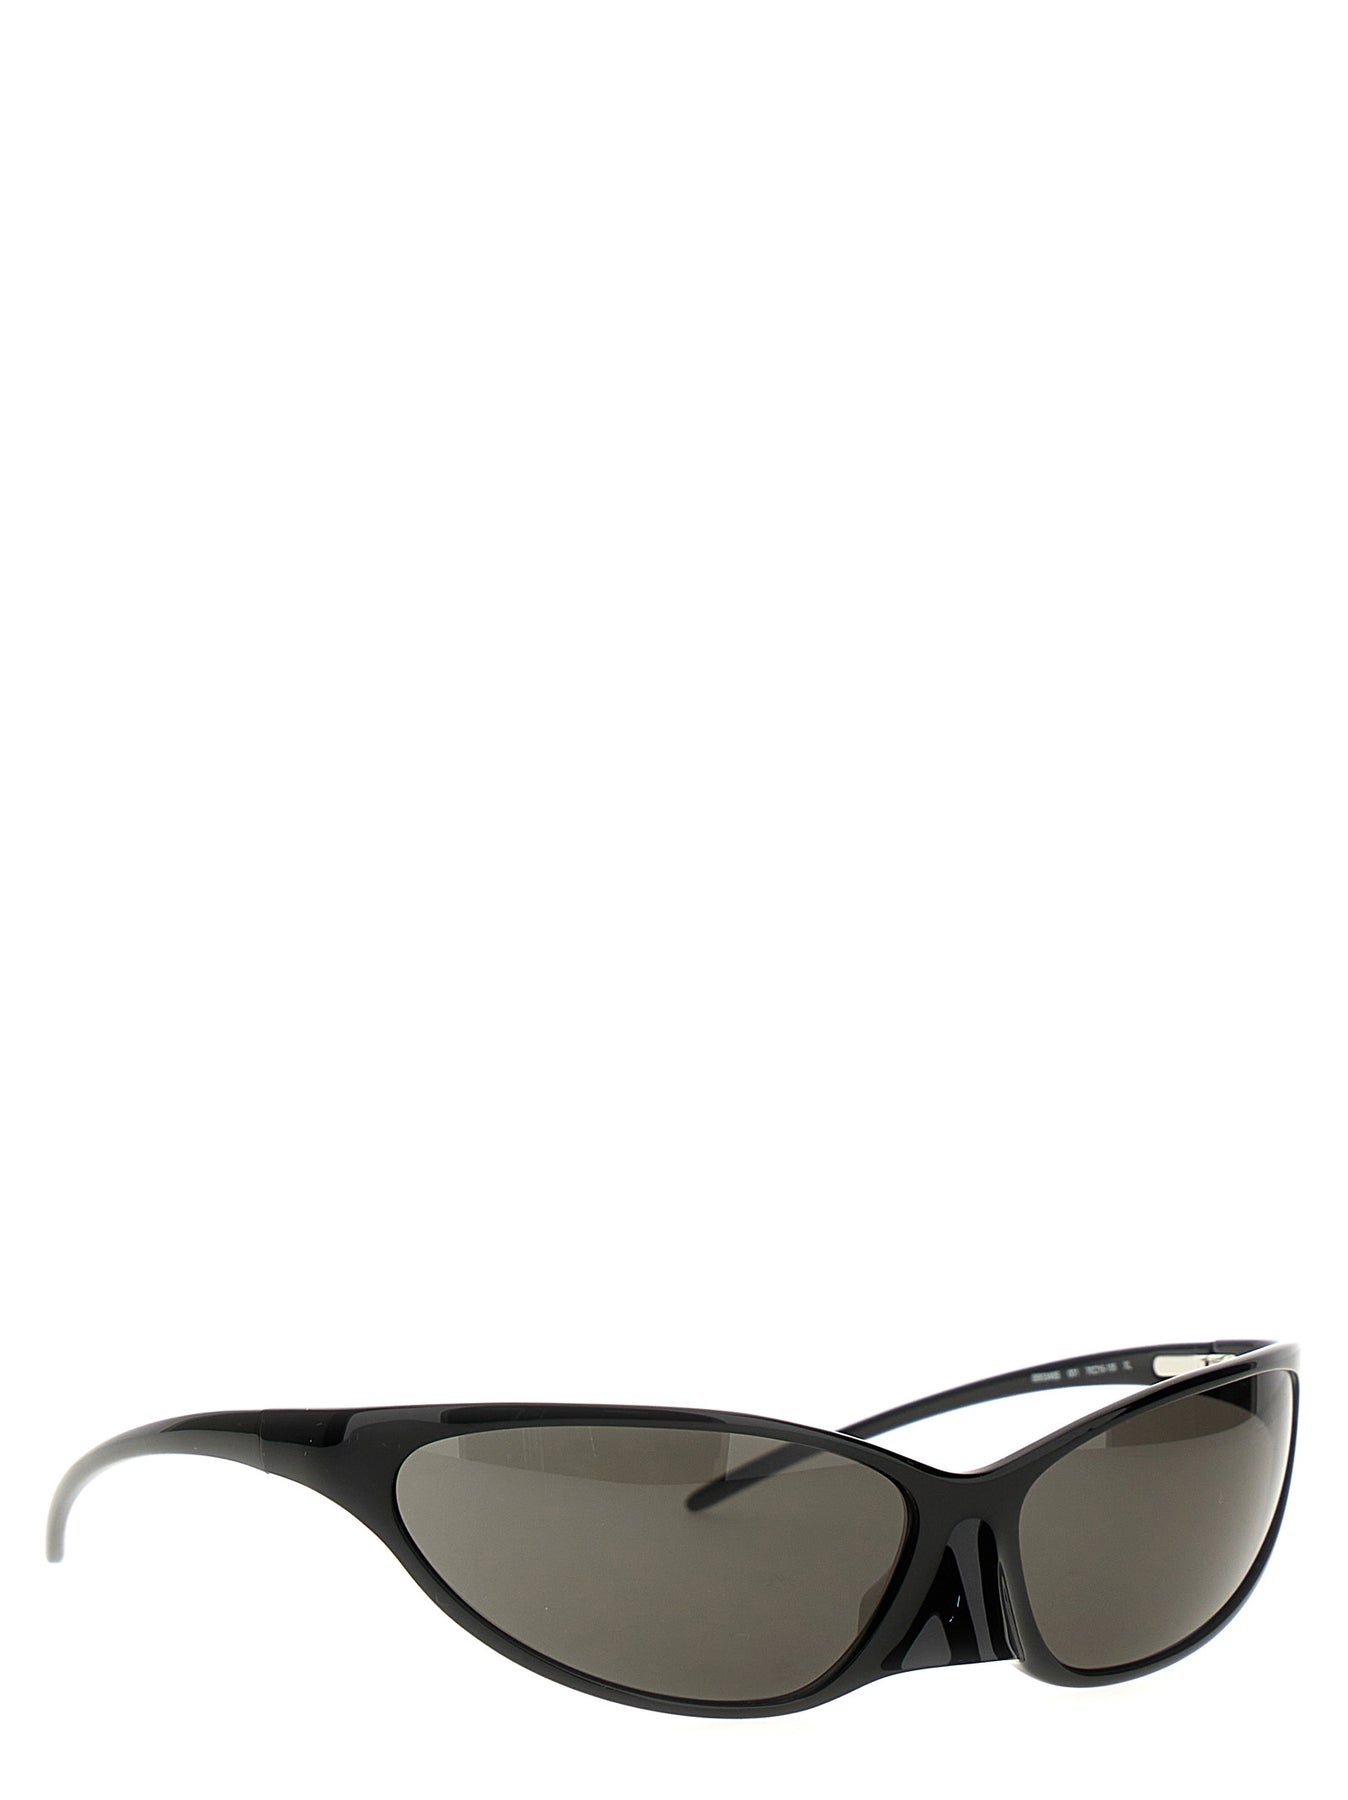 4g Cat Sunglasses Black - 2